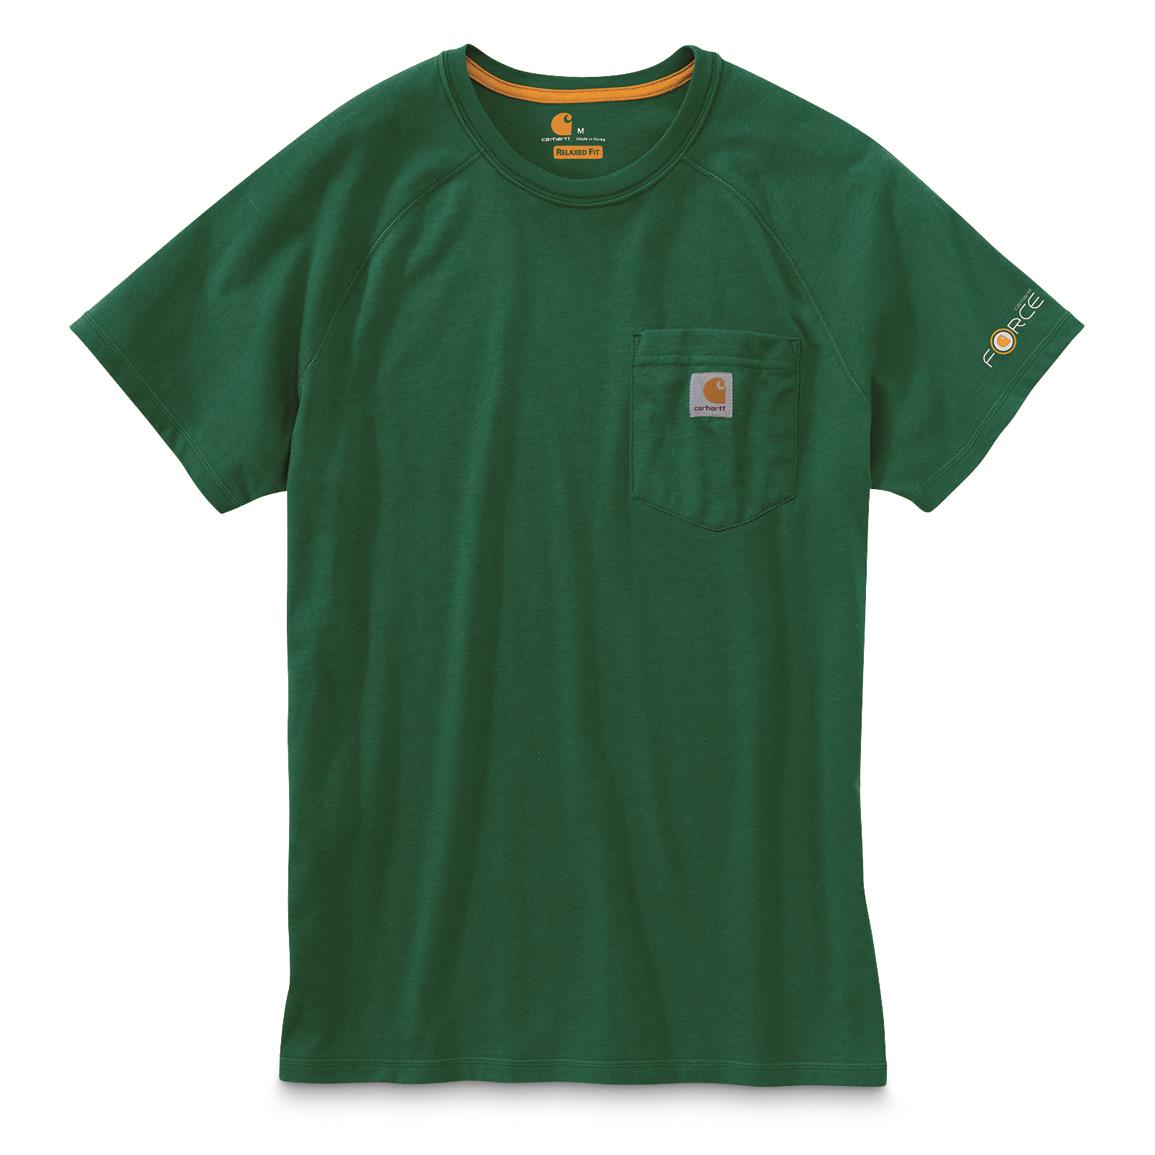 Carhartt Men's Force Cotton Delmont Short Sleeve Shirt - 590859, T-Shirts at Sportsman's Guide